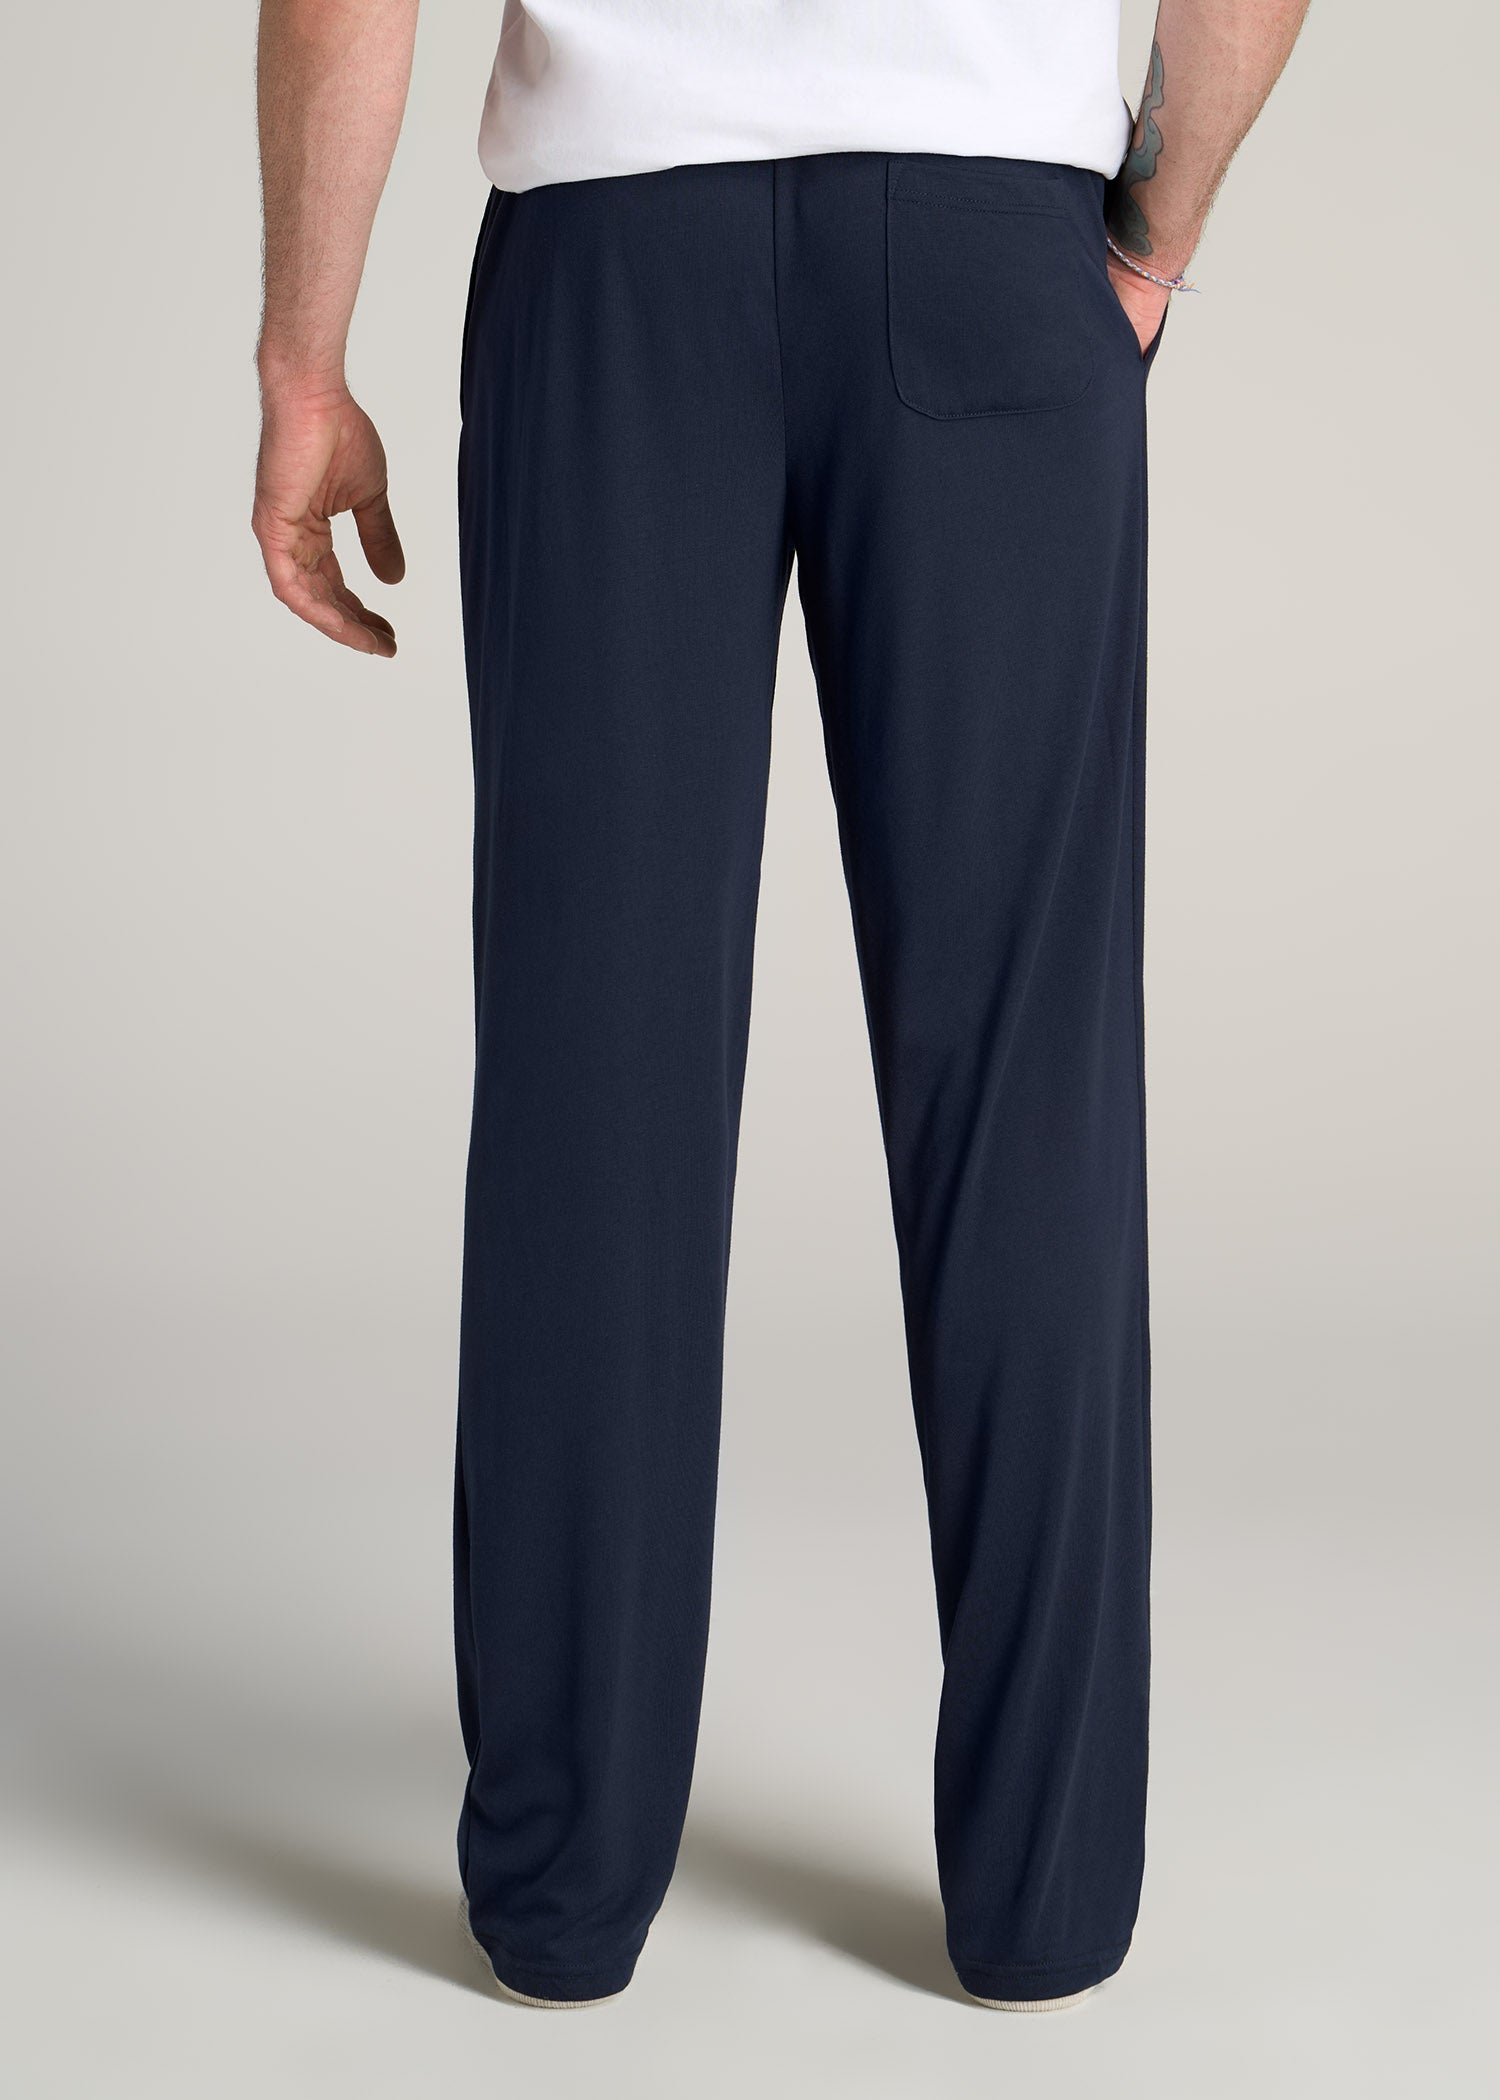 Haband Men's Jersey Comfort Pants, Elastic Cuff